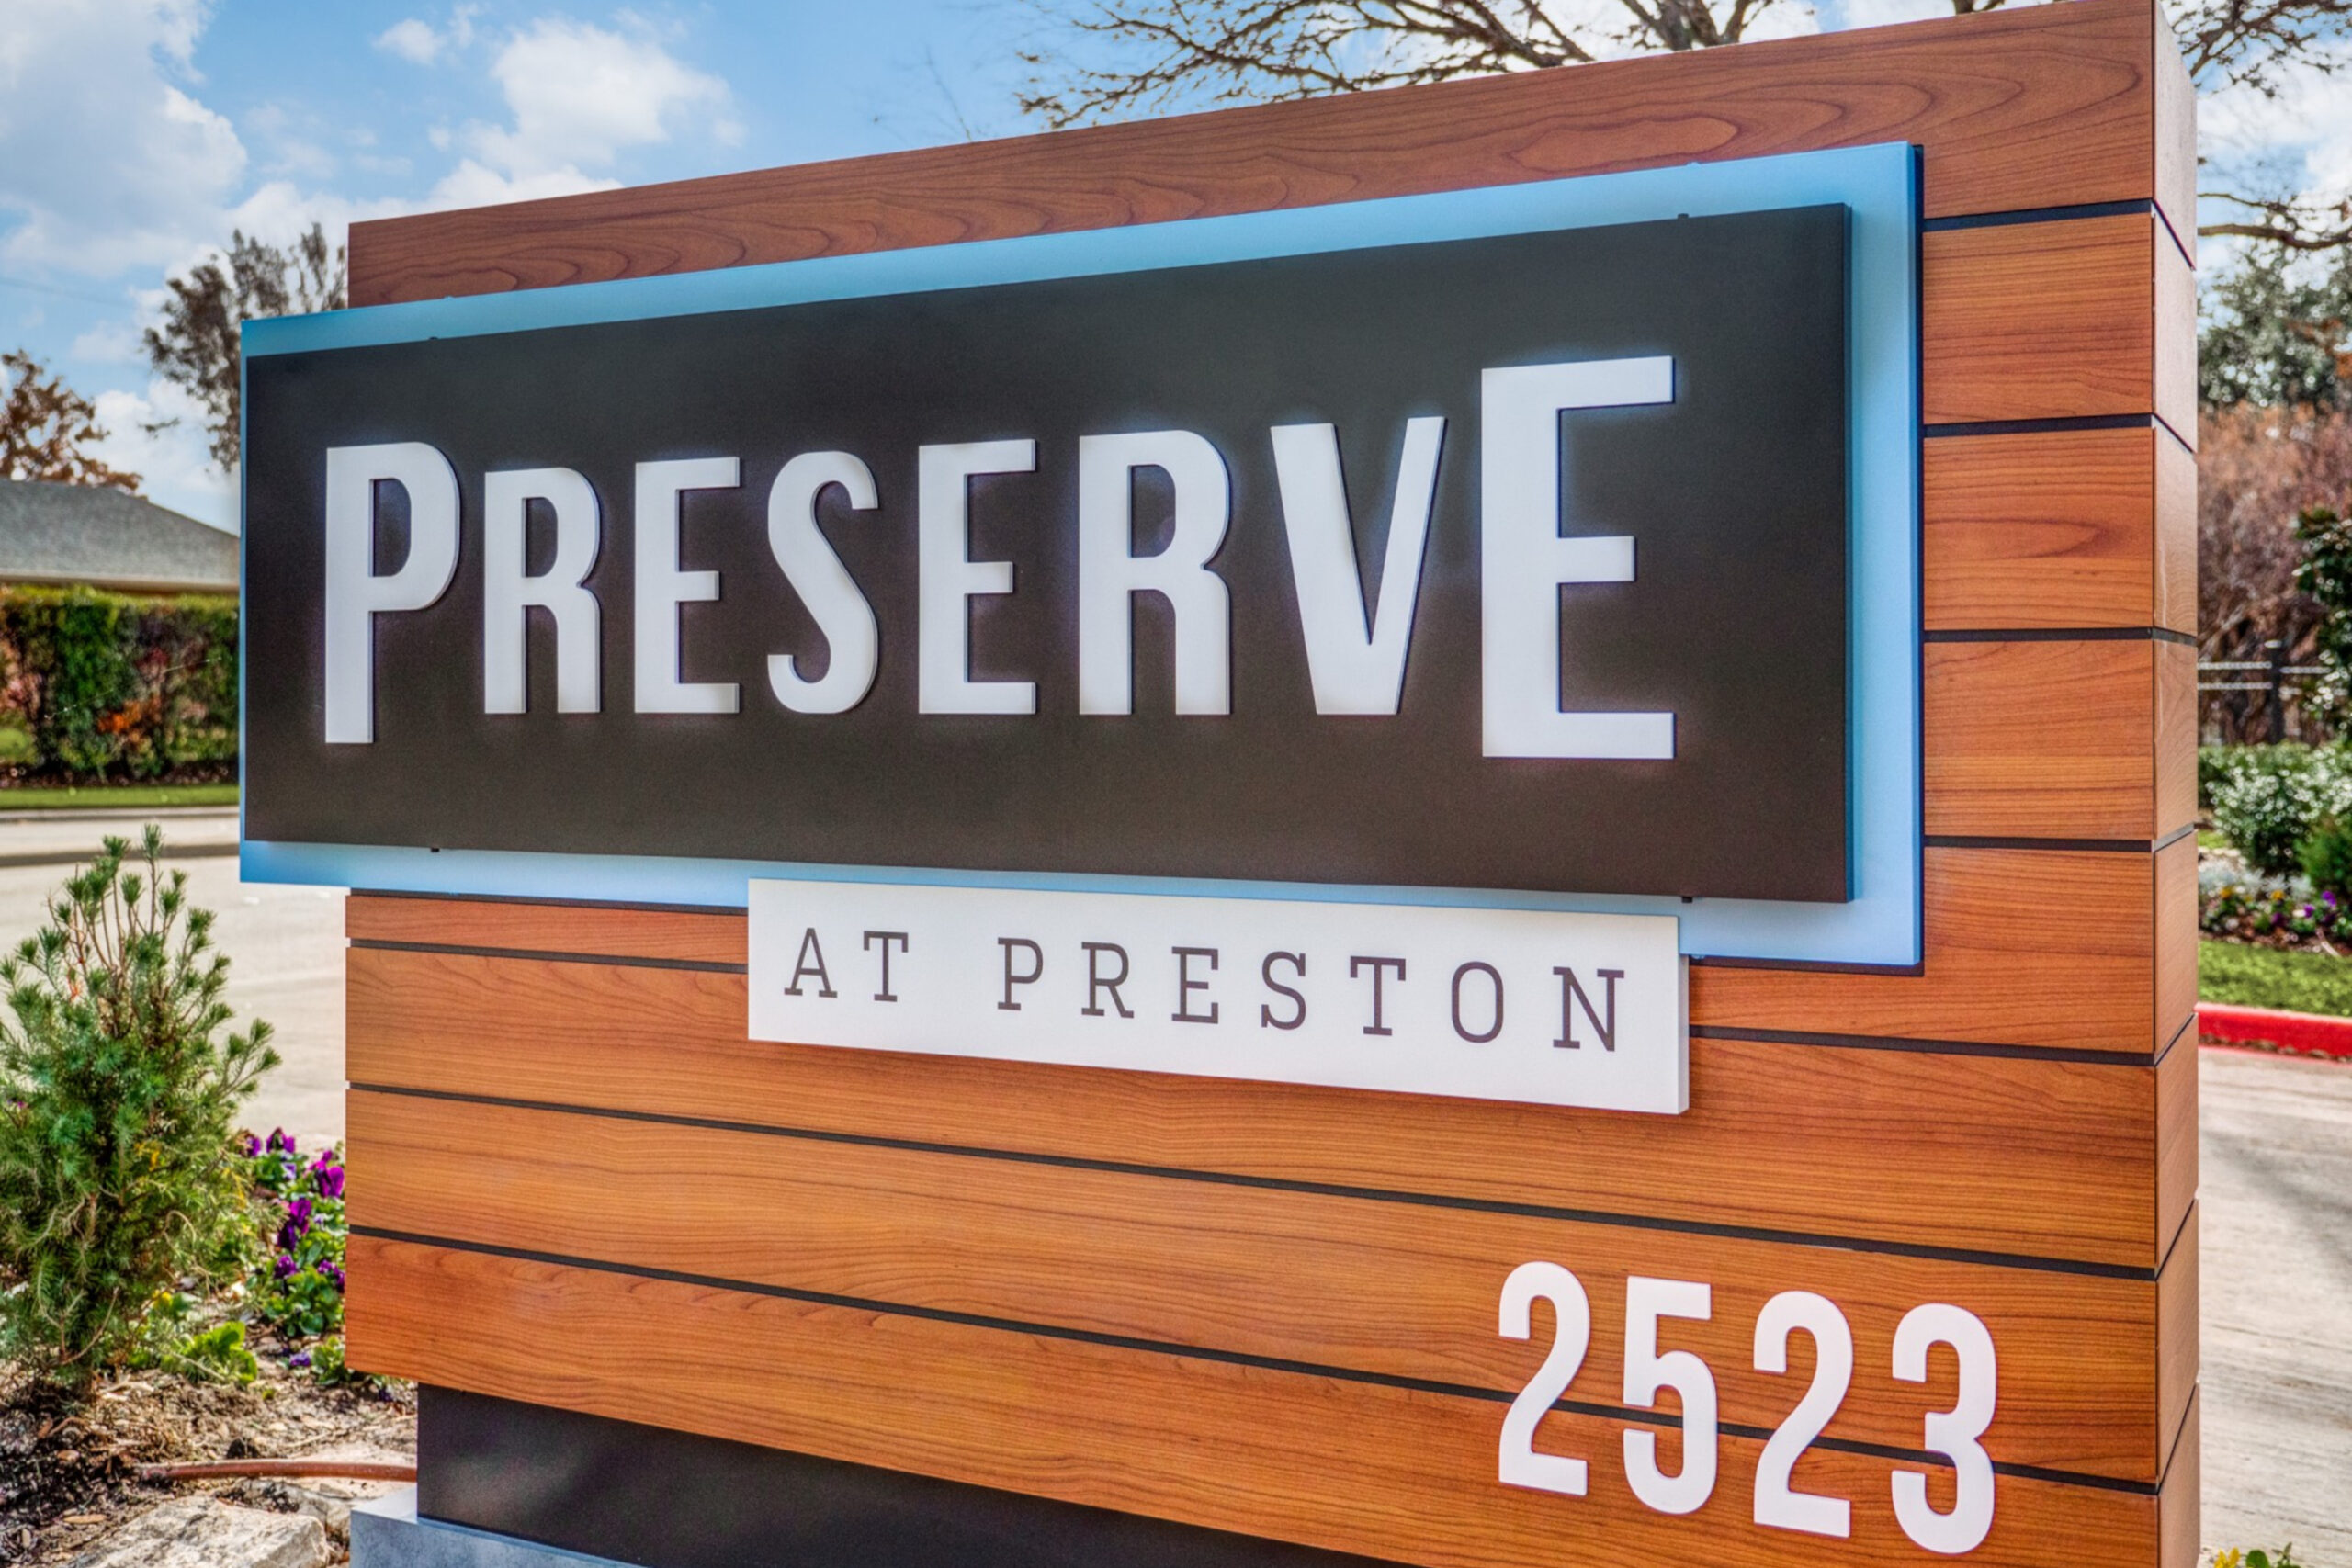 The Preserve at Preston front signage